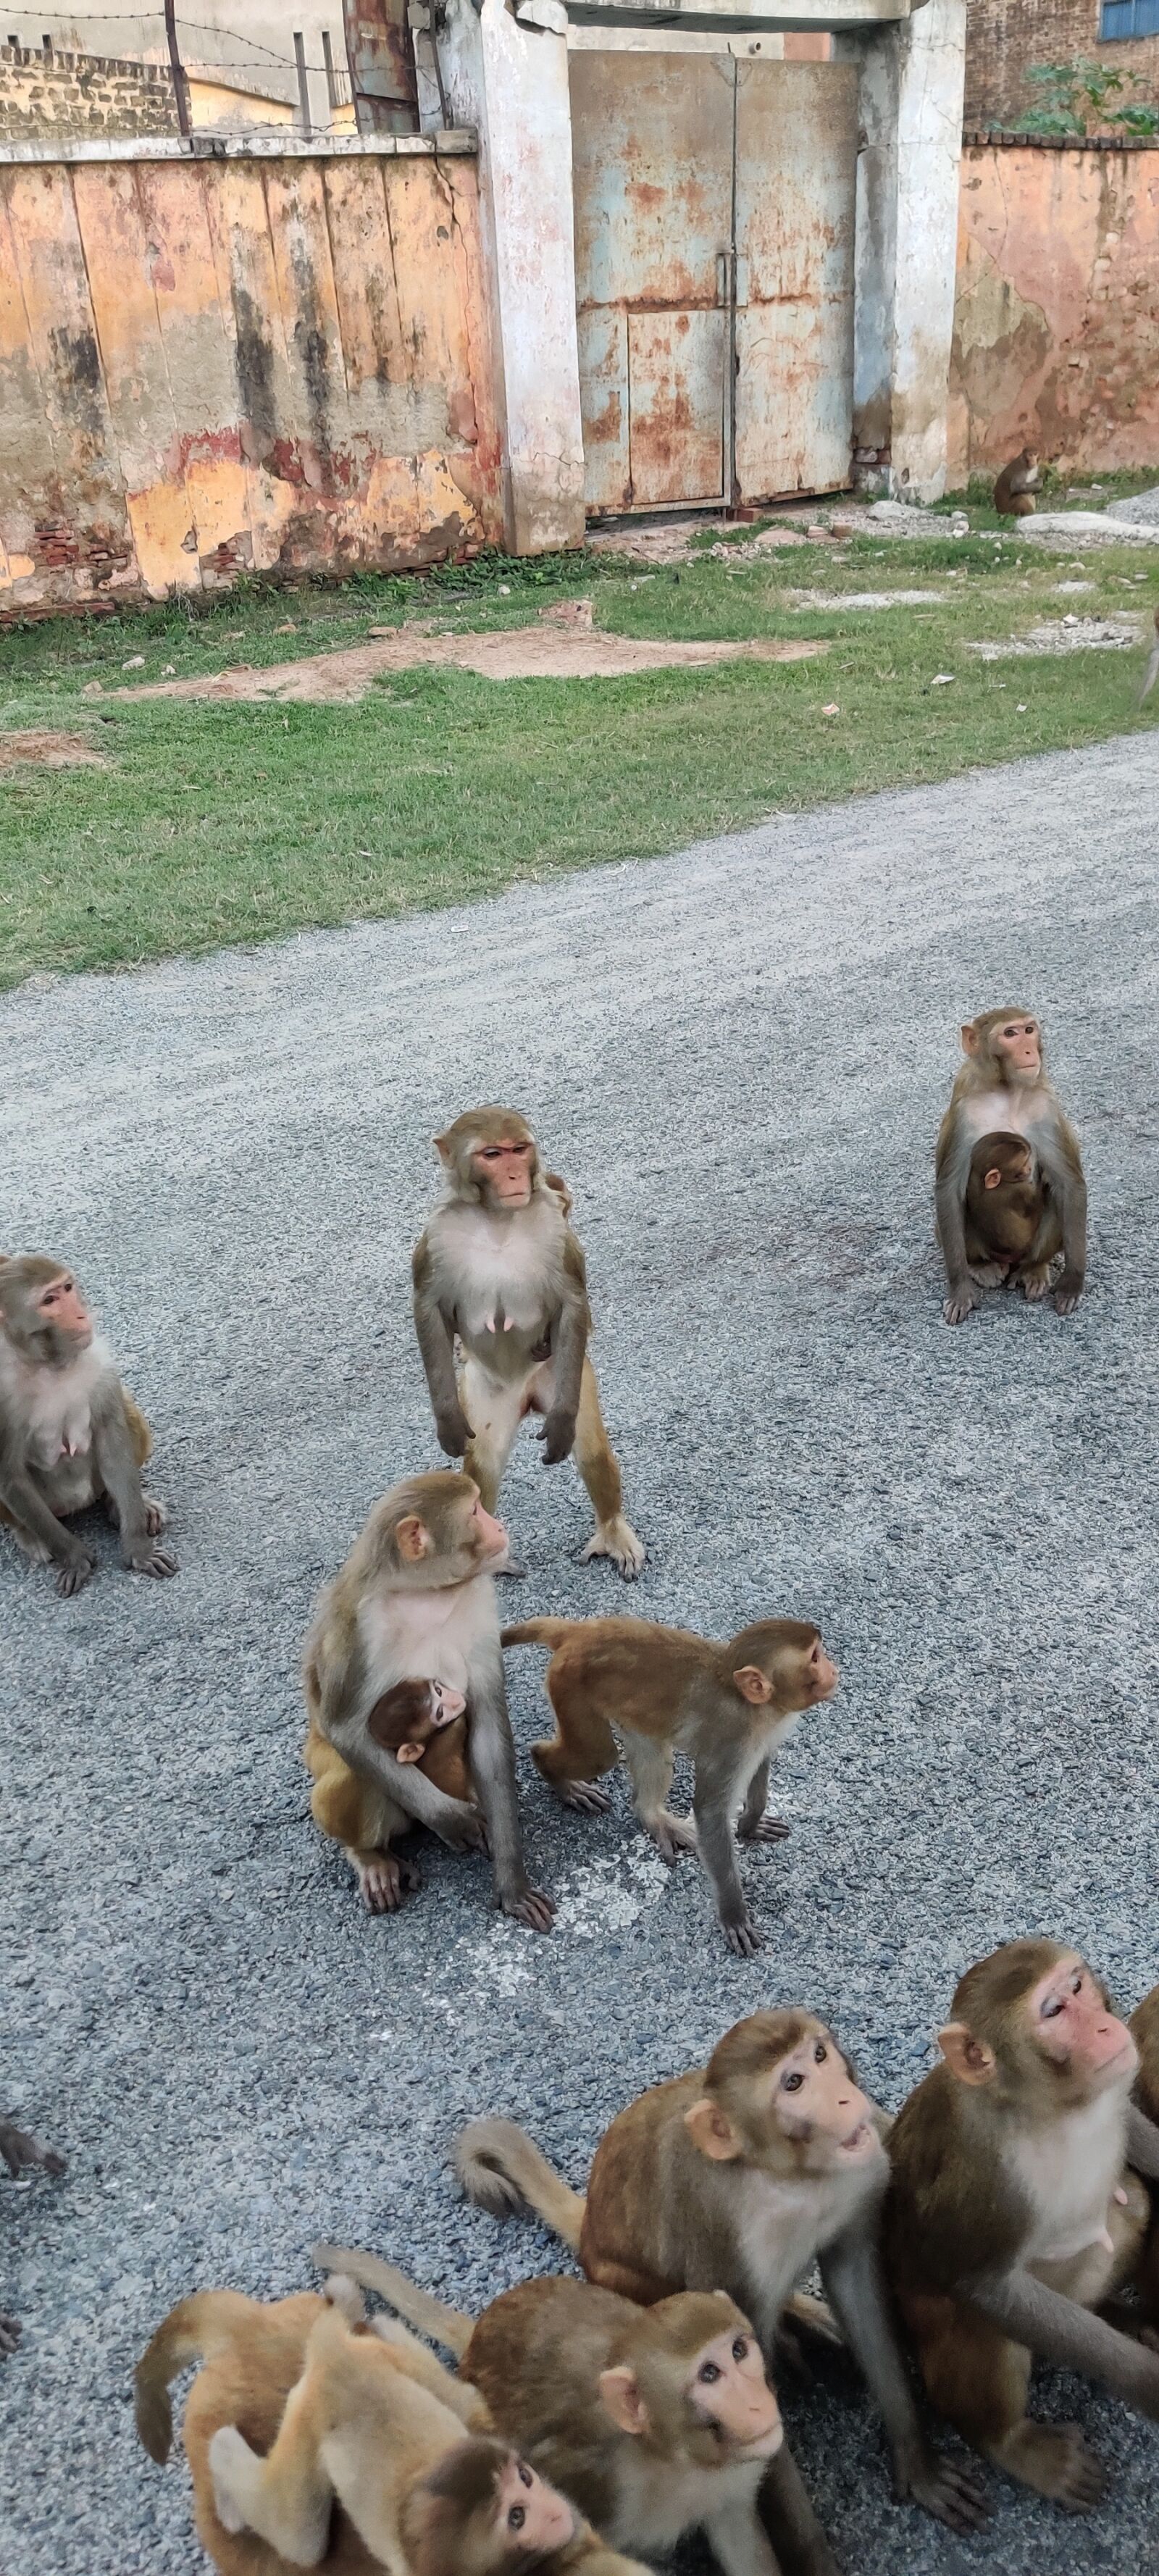 OnePlus HD1901 sample photo. Animals, monkey, monkeys photography